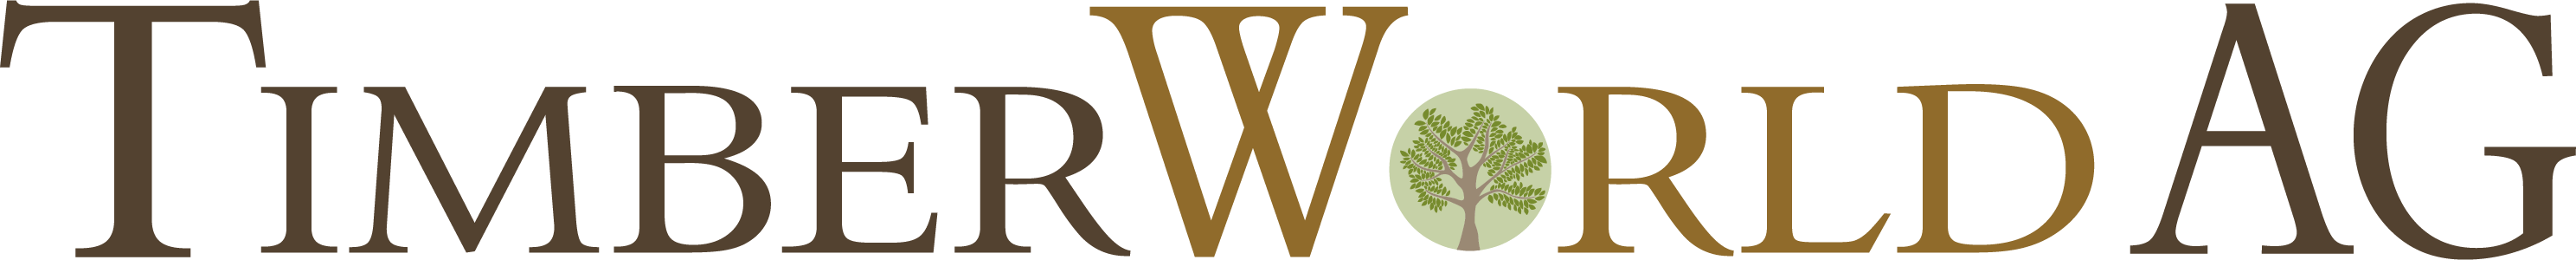 TimberWorld AG Logo